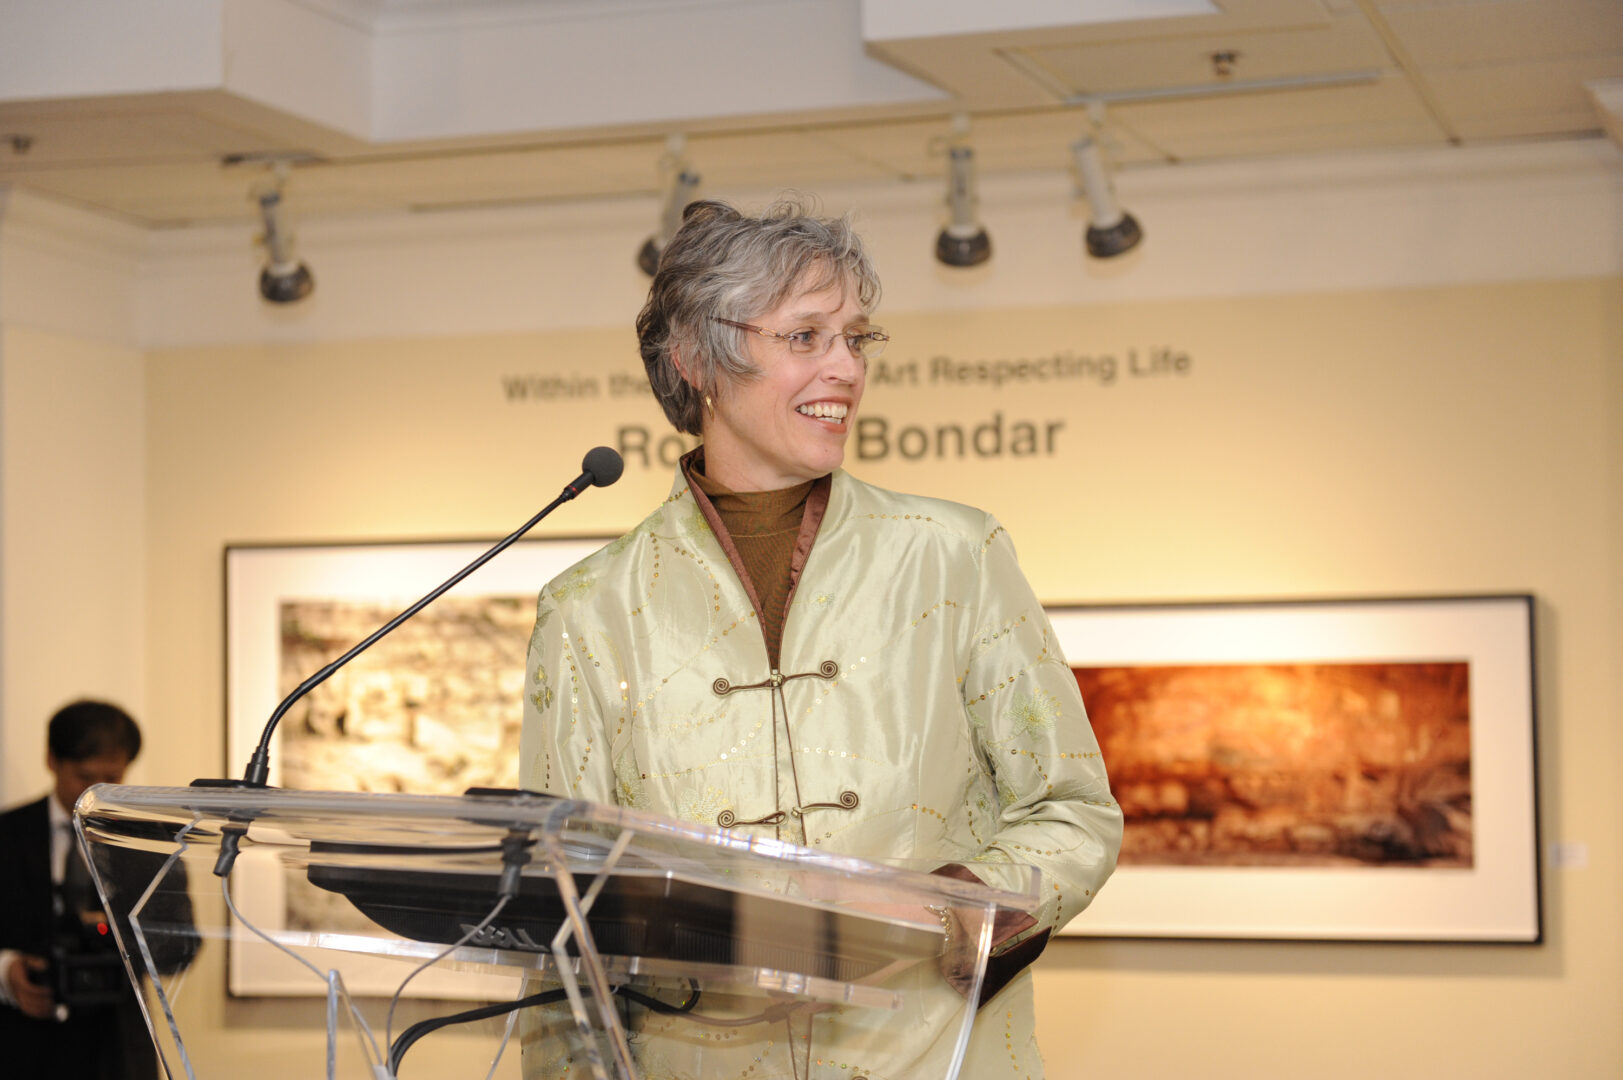 Joan Hamilton, Principal, Roberta Bondar Public School, Brampton, addresses gallery patrons at The Roberta Bondar Foundation's first Traveling Exhibition and Learning Experience